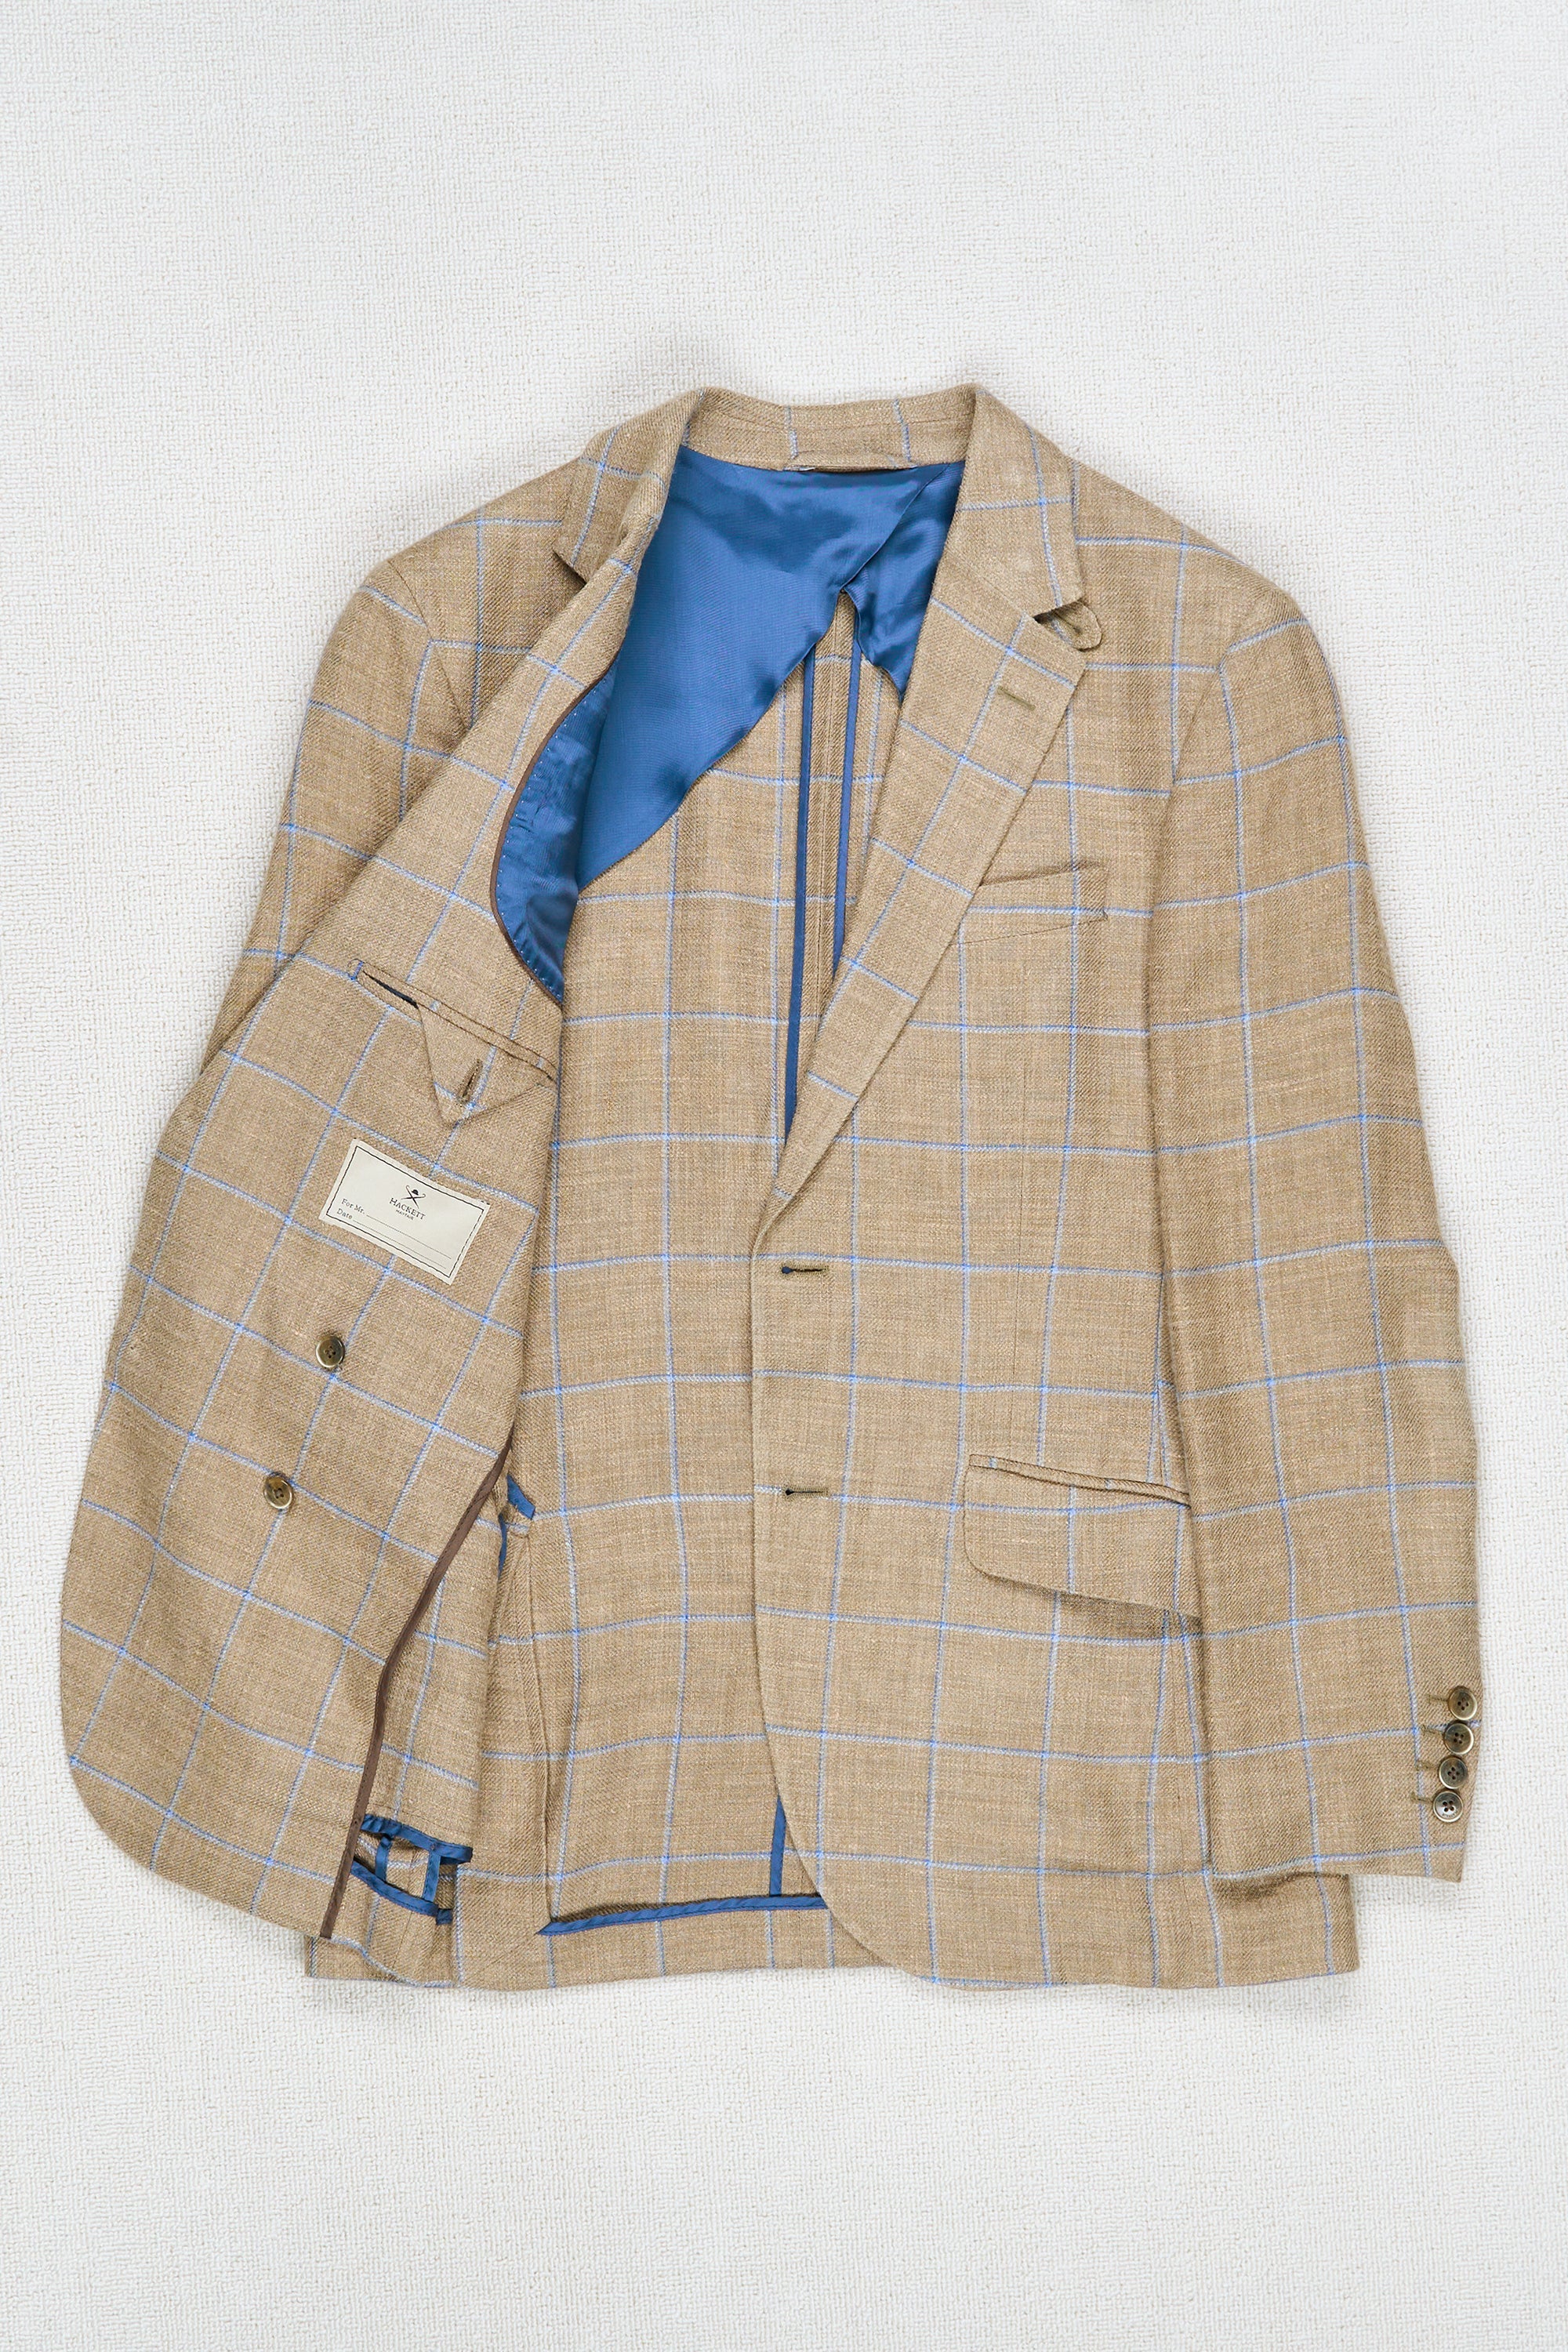 Hackett Beige with Blue Check Silk/Linen Sport Coat